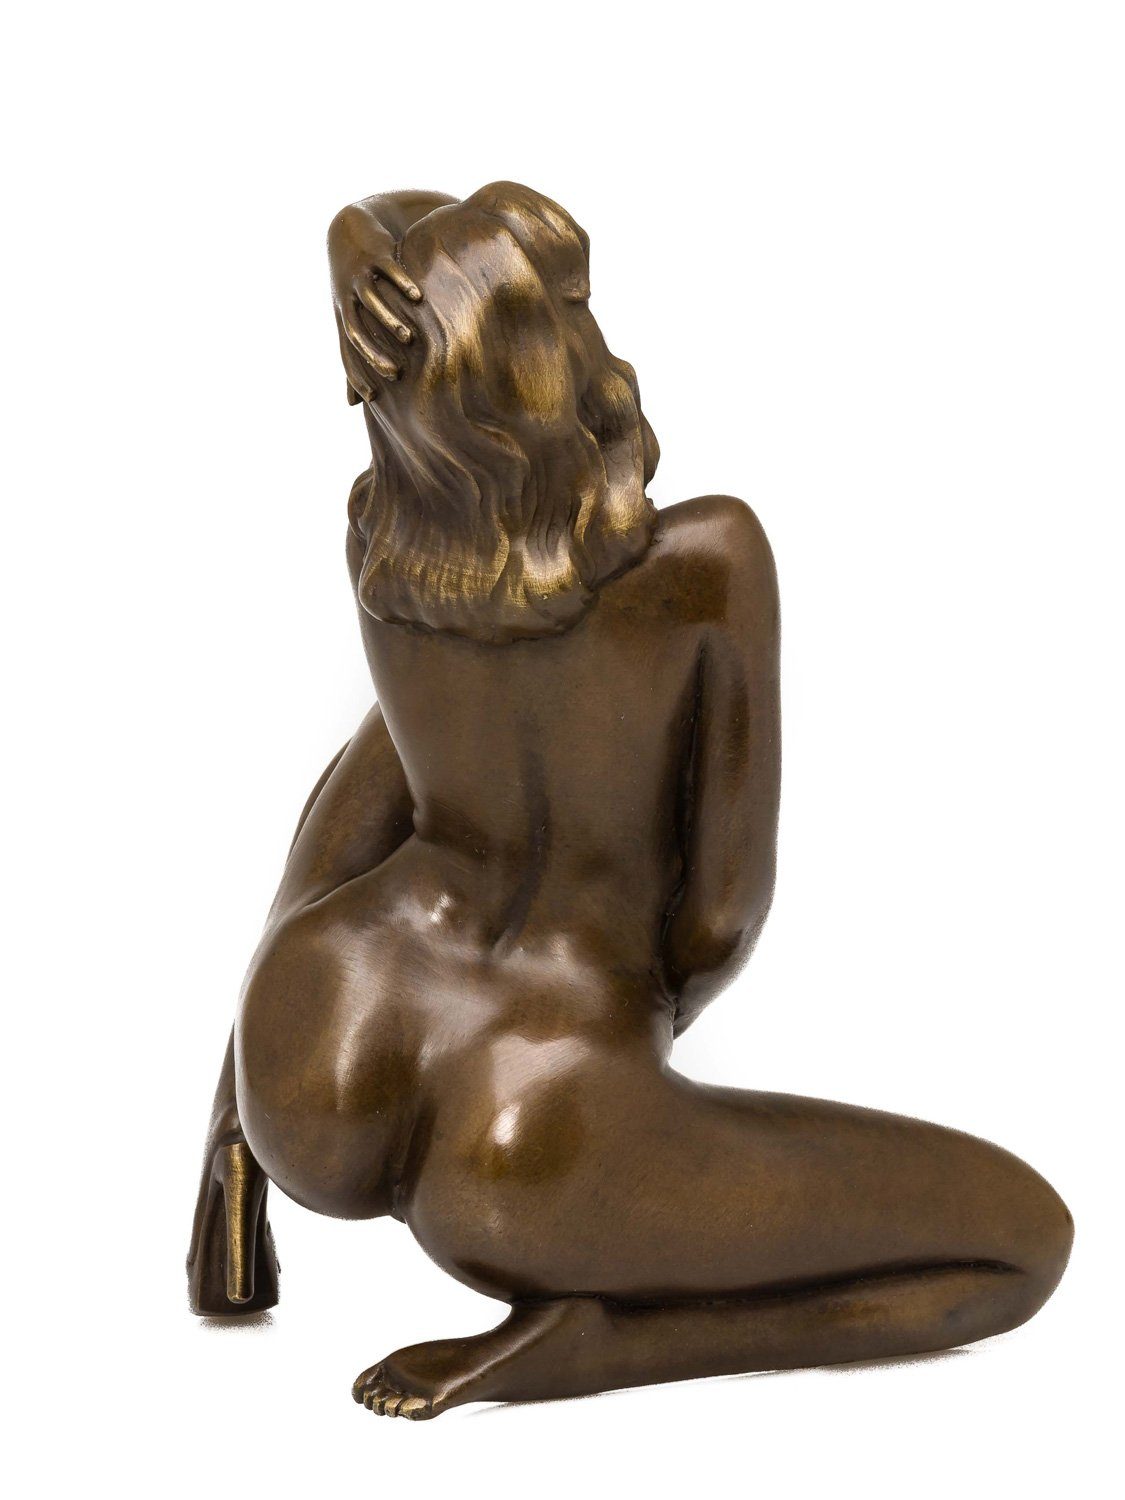 Kunst Skulptur Bronze Dame Bronzeskulptur scu erotische Aubaho Bronze Figur nackte Akt